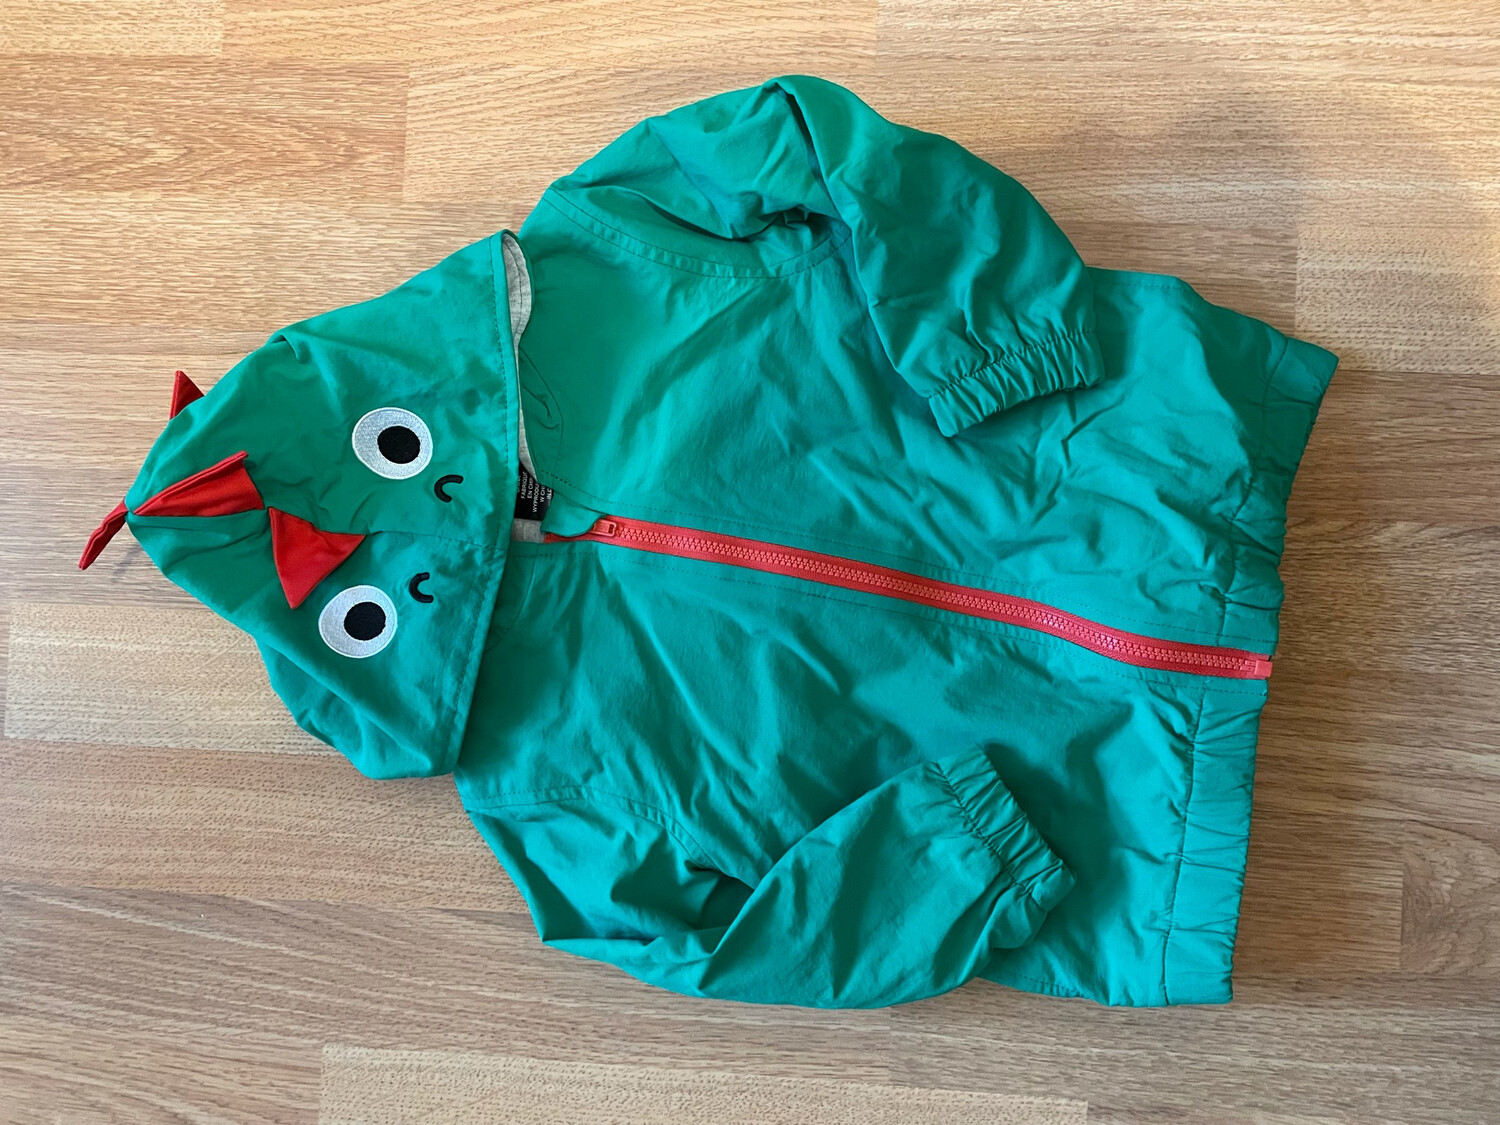 Dinosaur Jacket